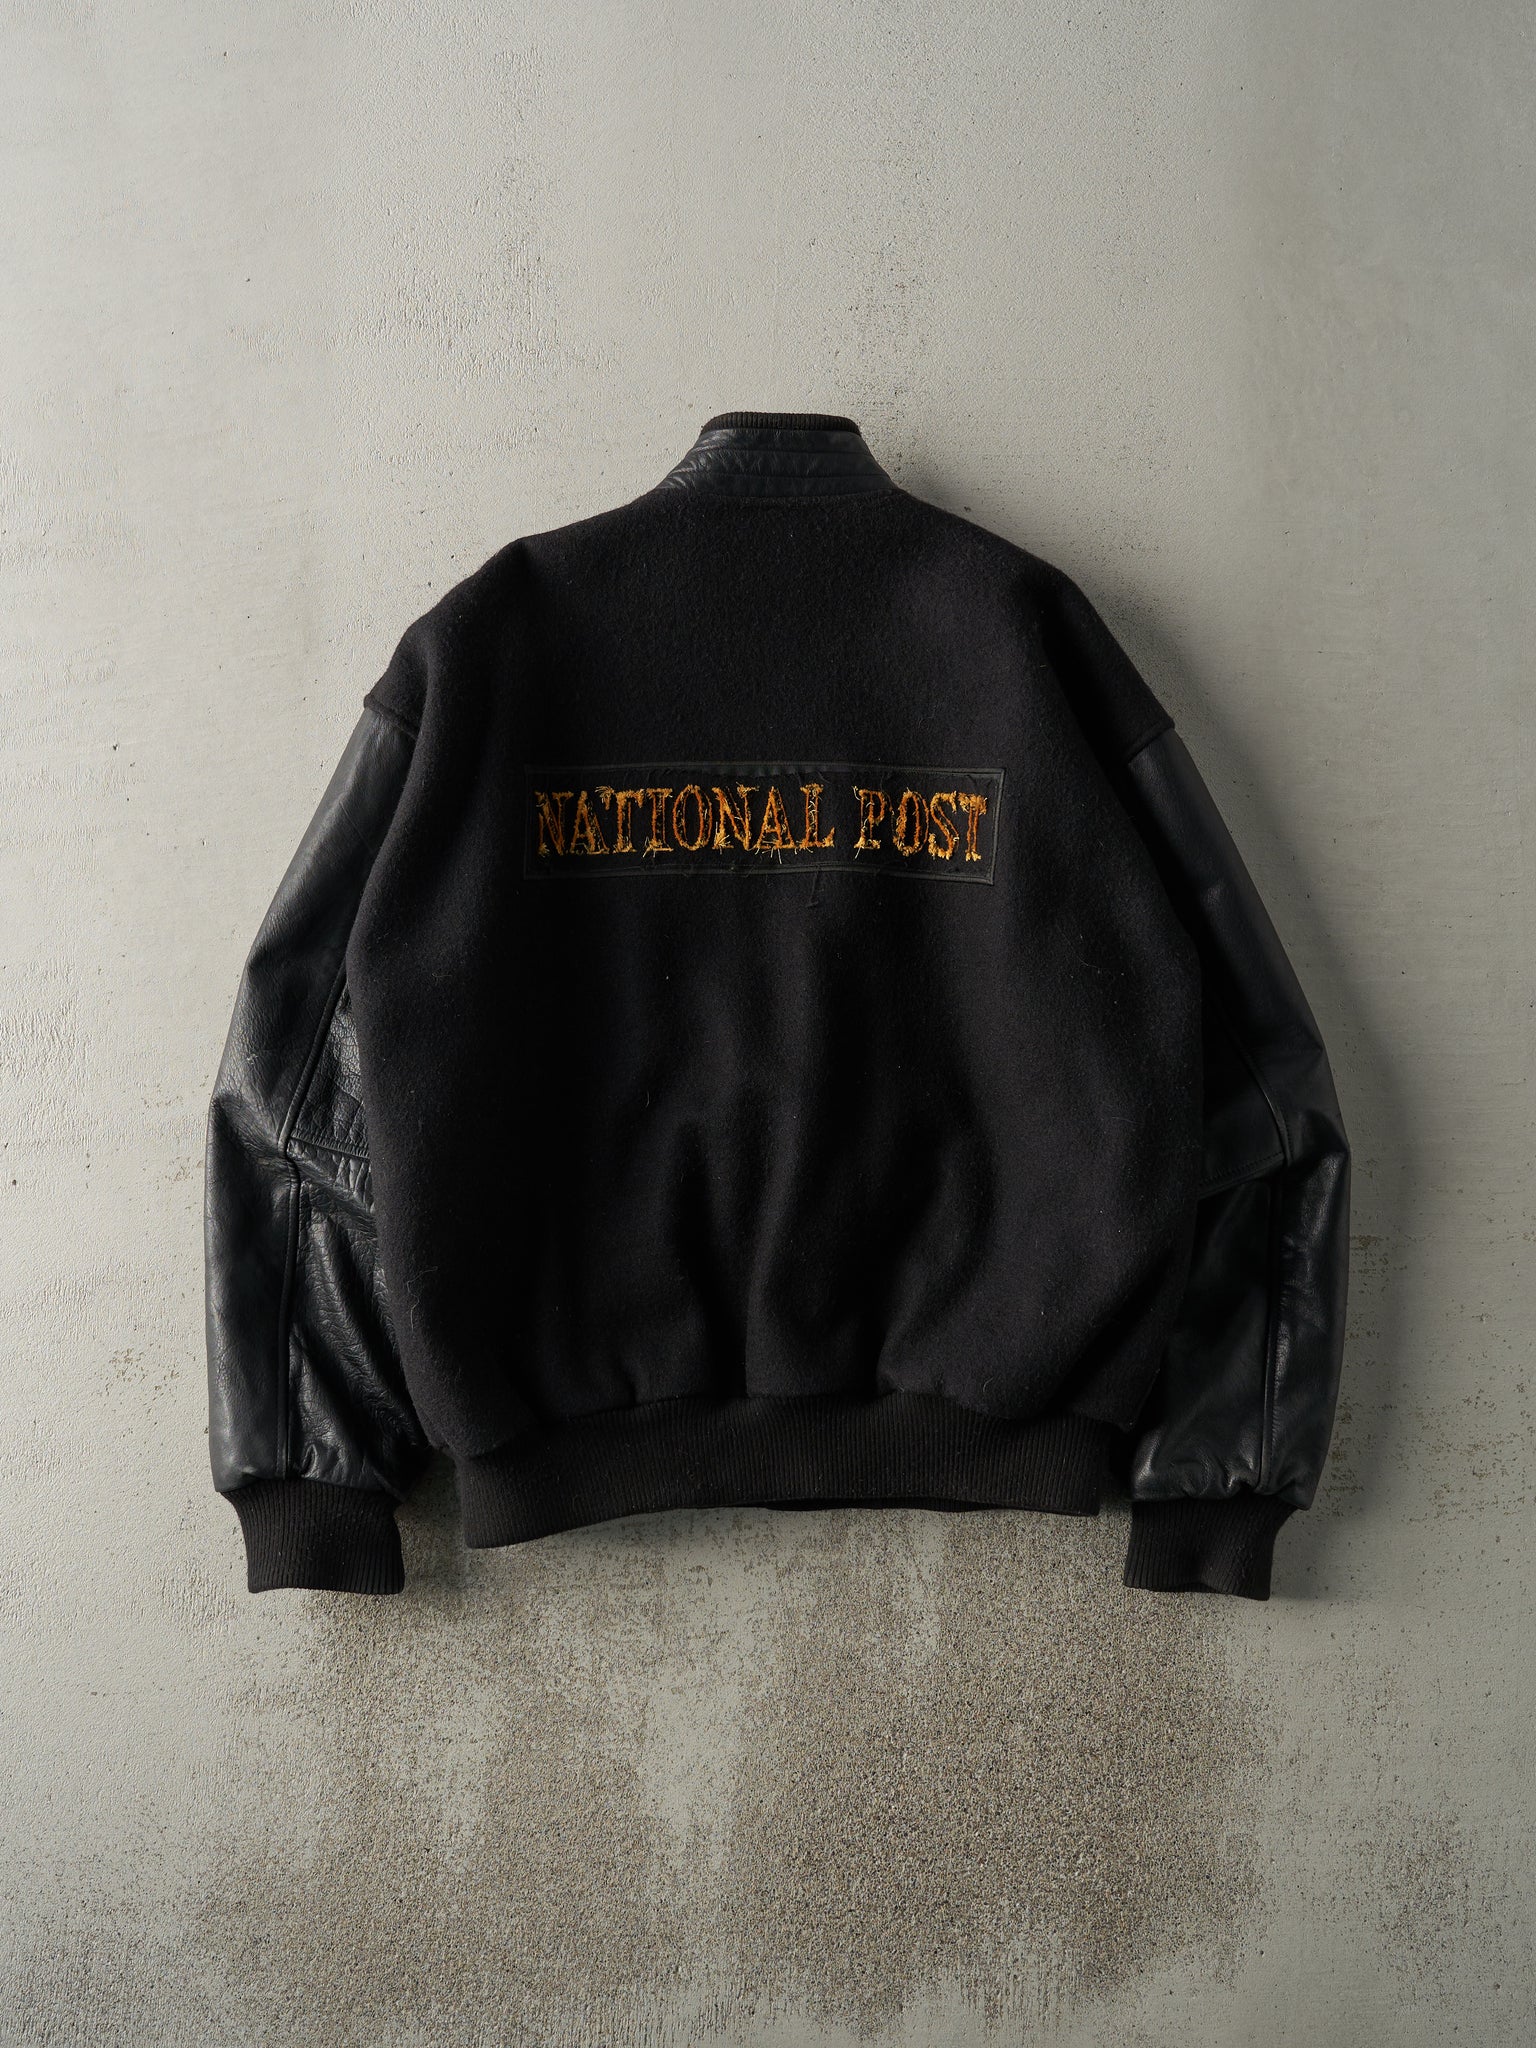 Vintage 90s Black National Post Wool Leather Varsity Jacket (L)